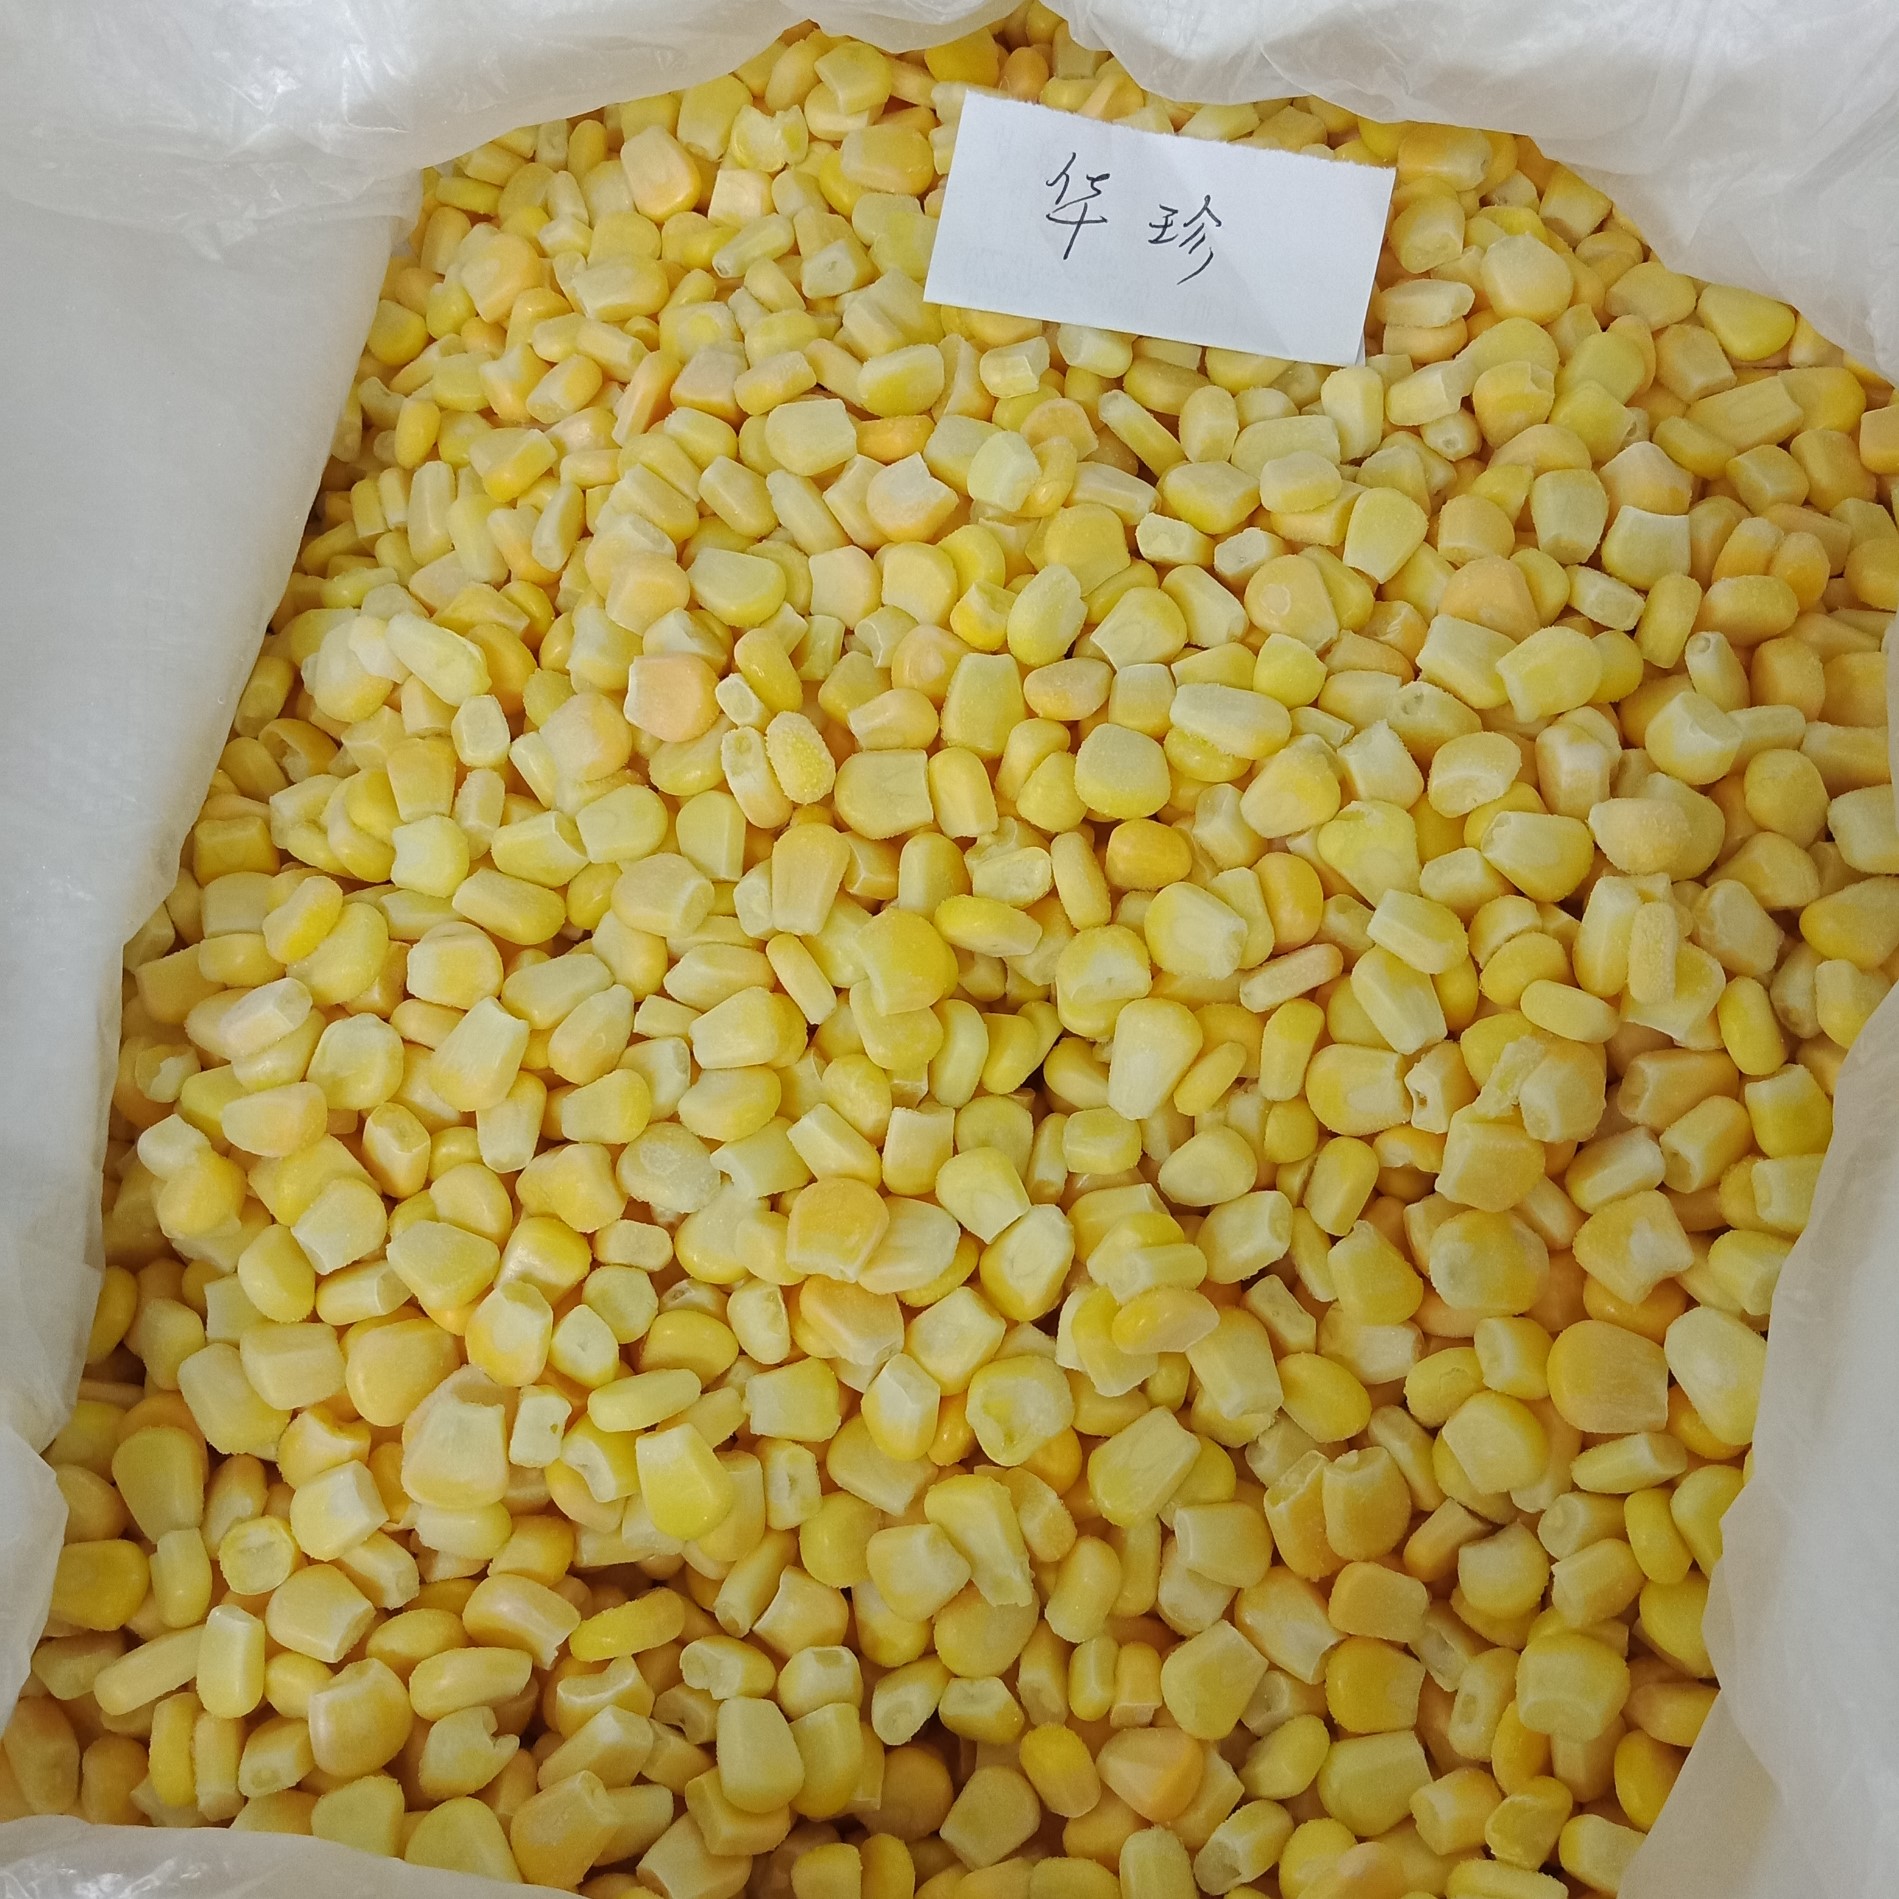 IQF Frozen Corn Kernel